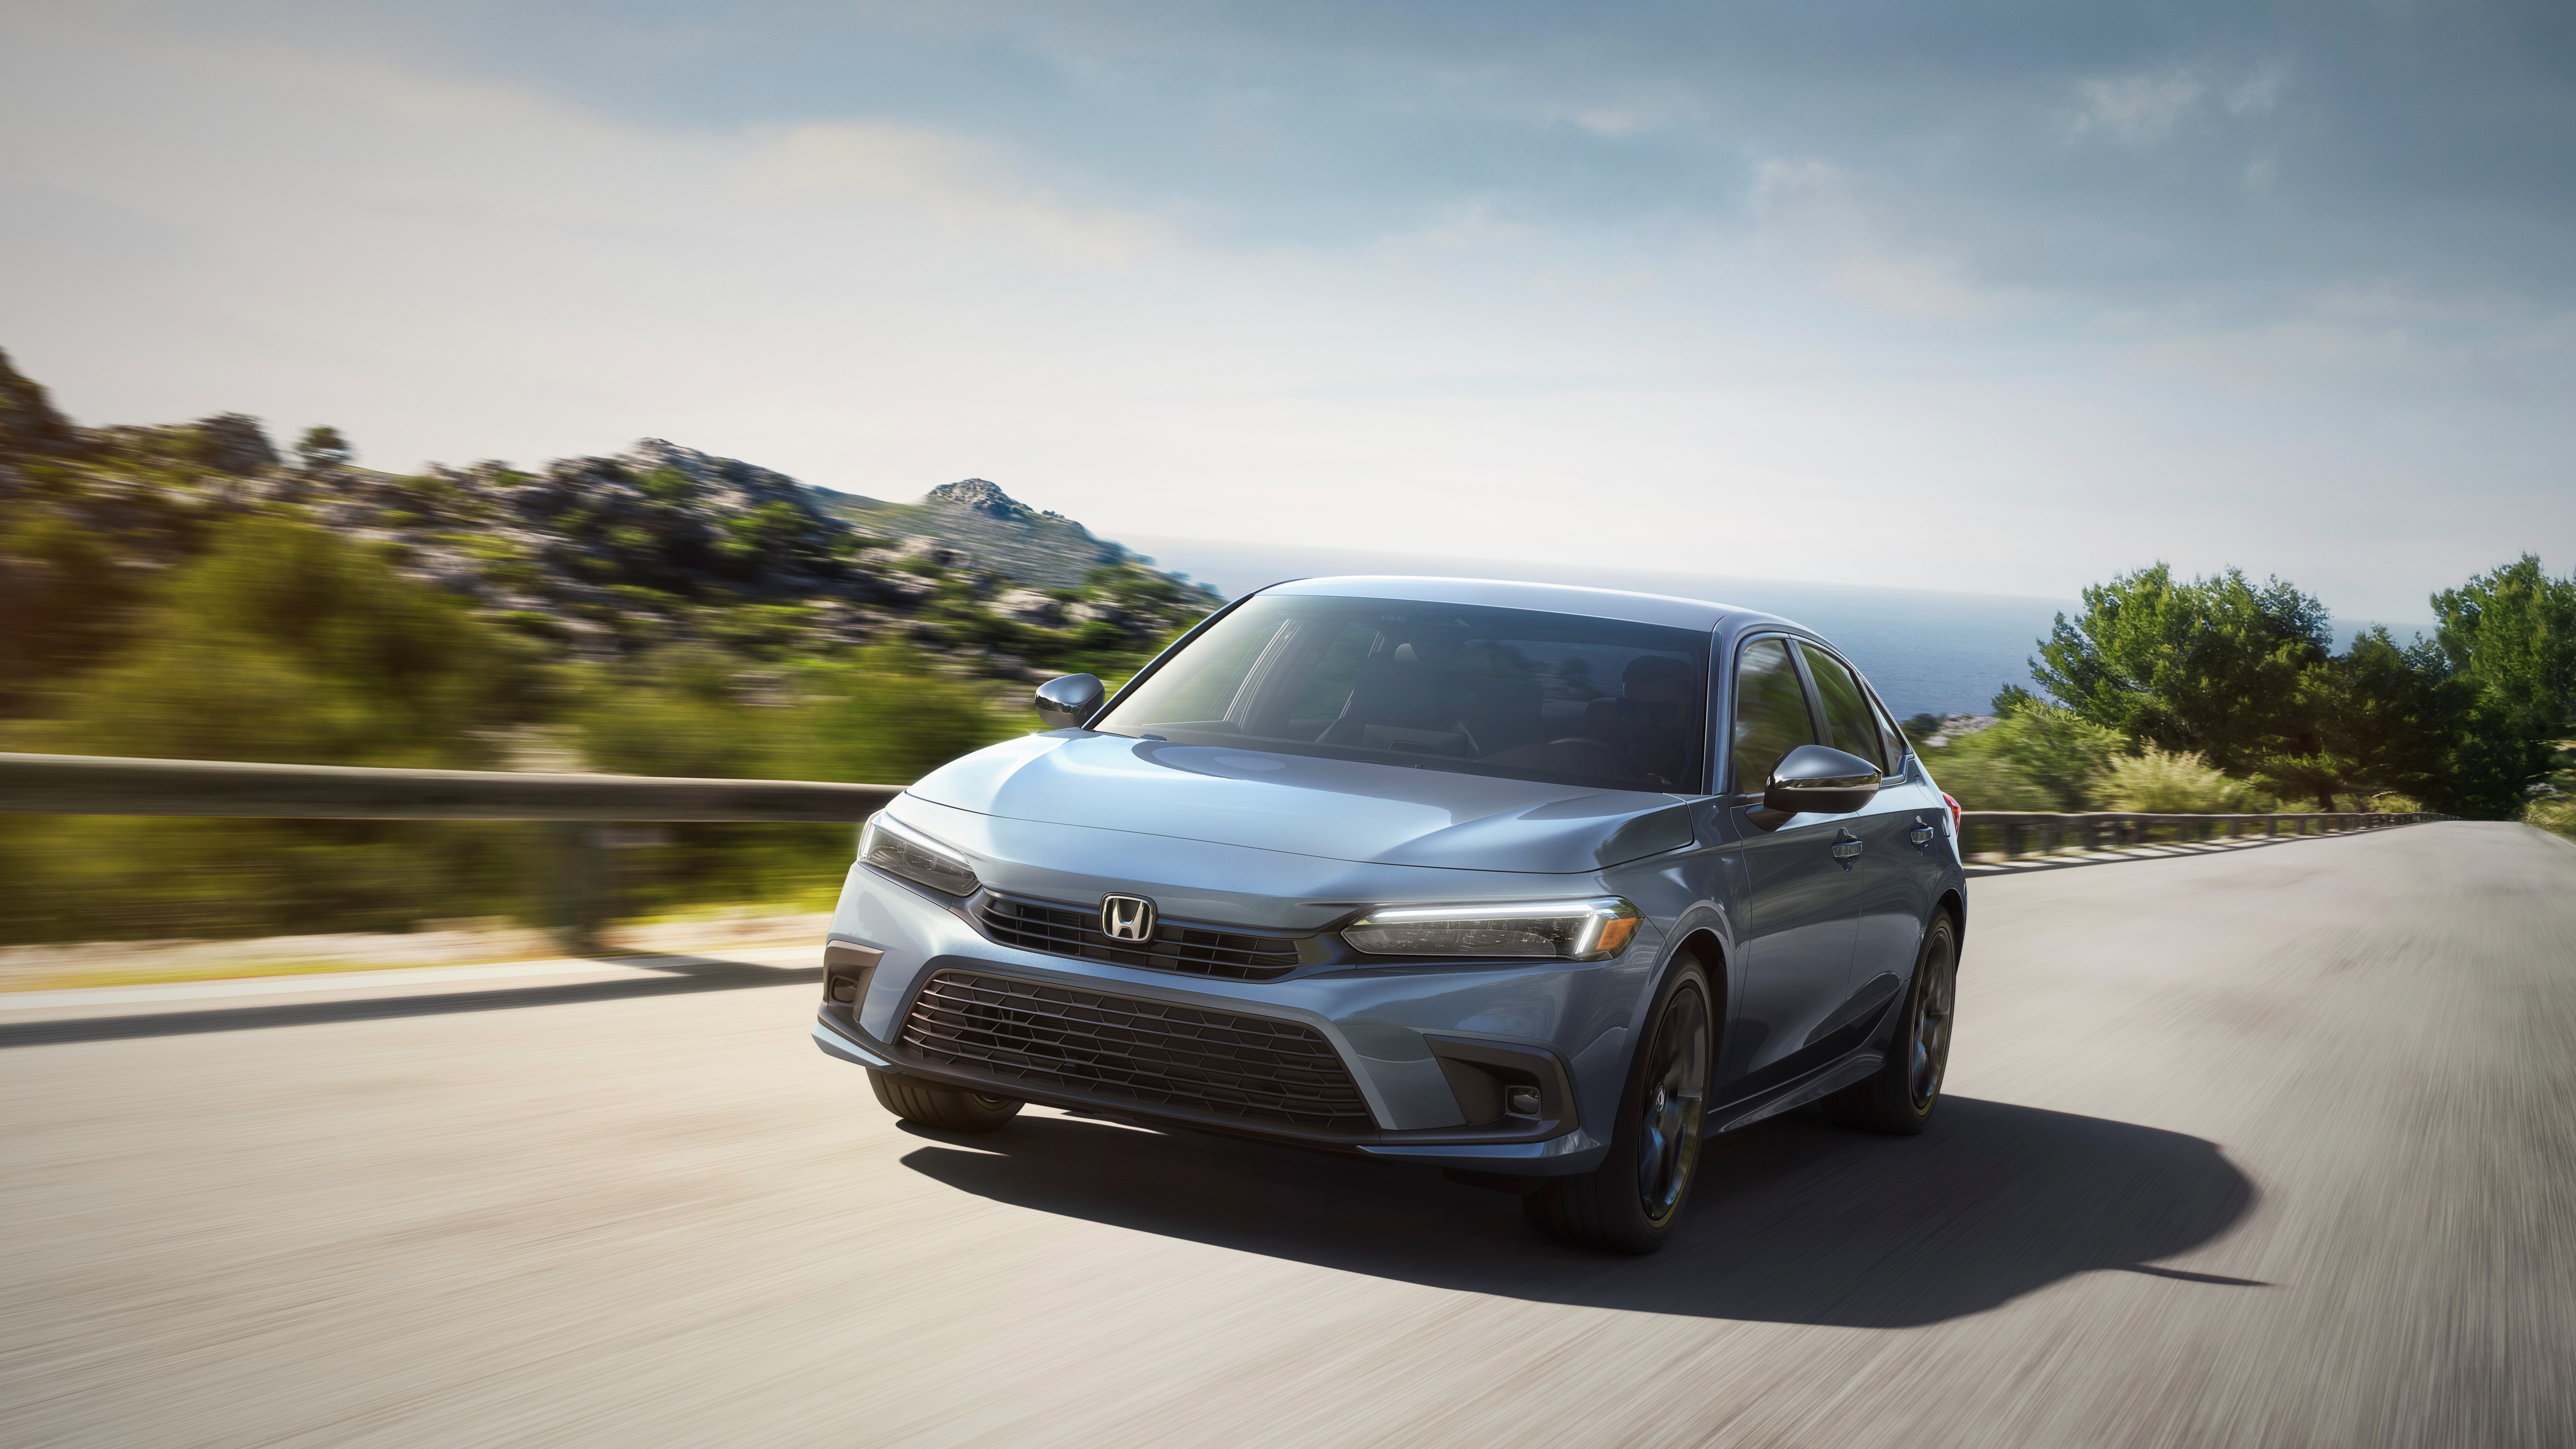 Honda Reveals All-New 11th Generation Civic Sedan